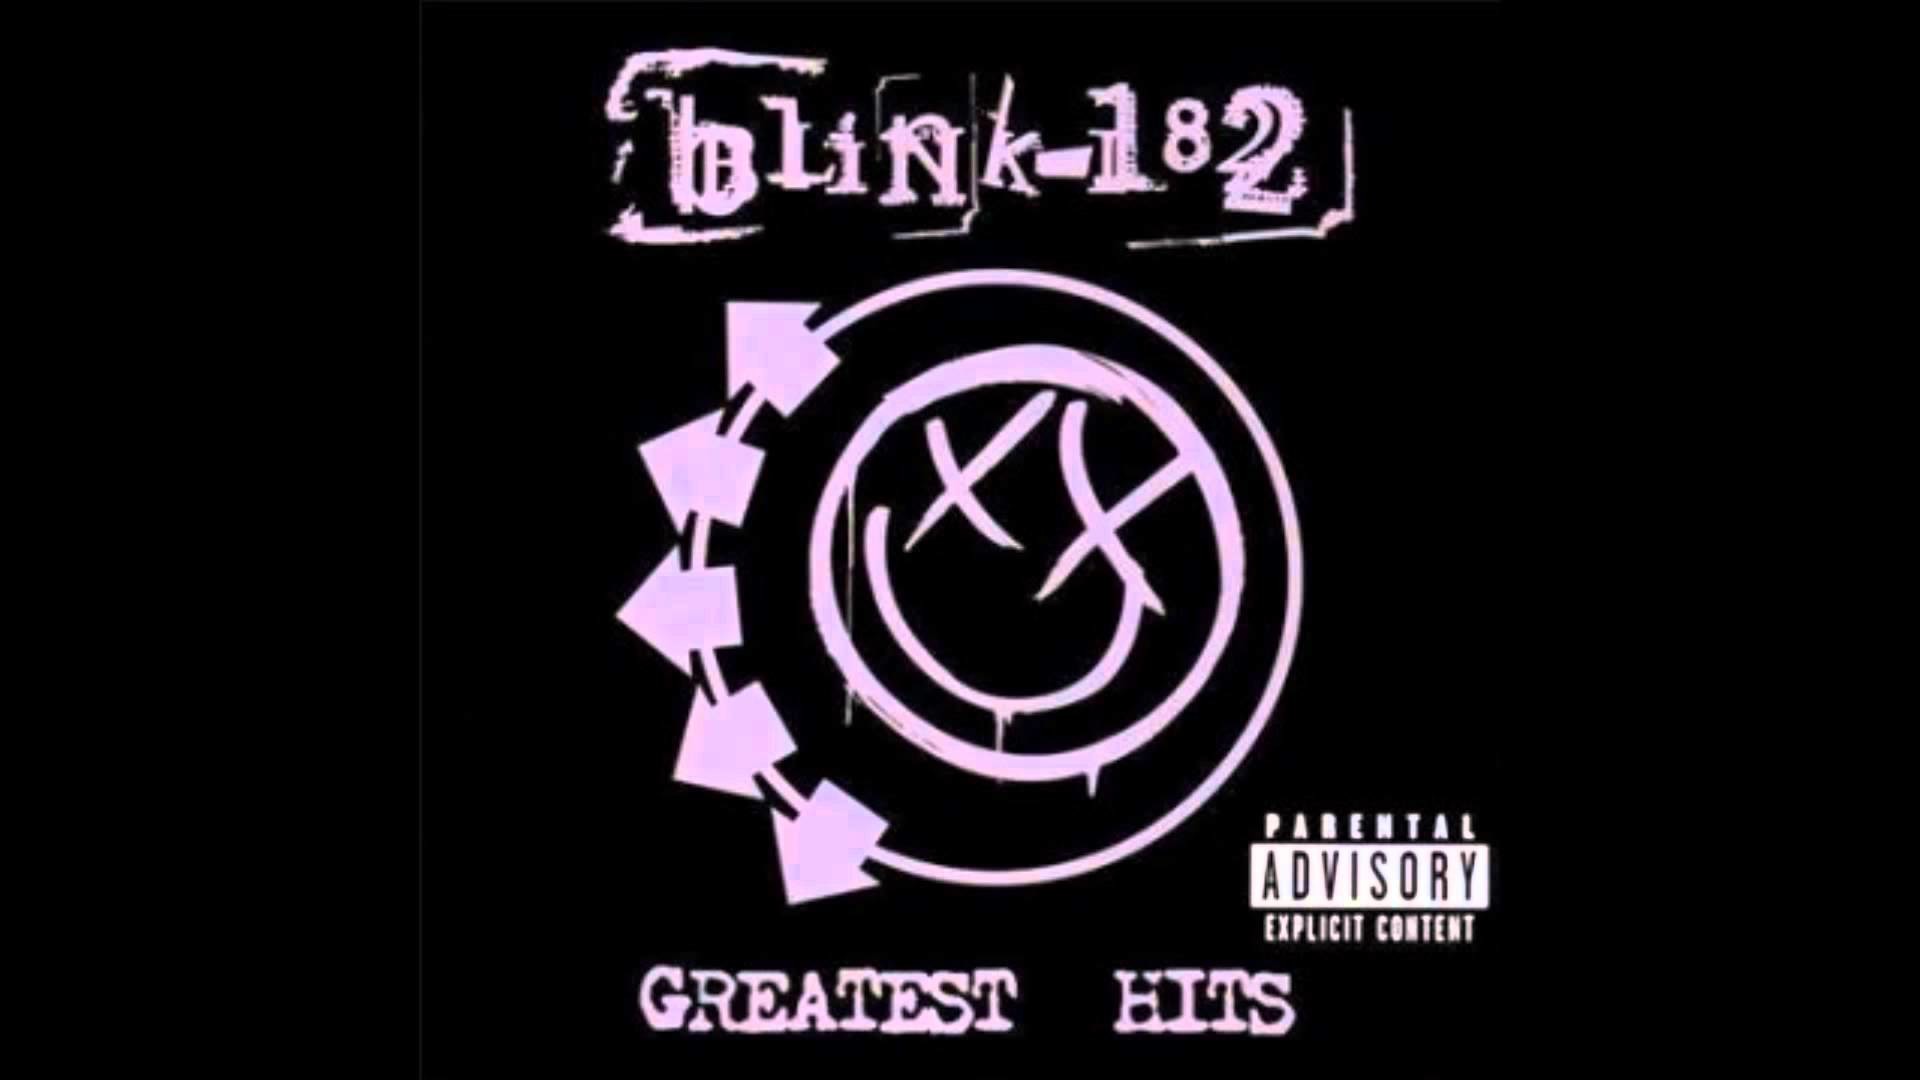 1920x1080 Blink 182 Greatest Hits Album